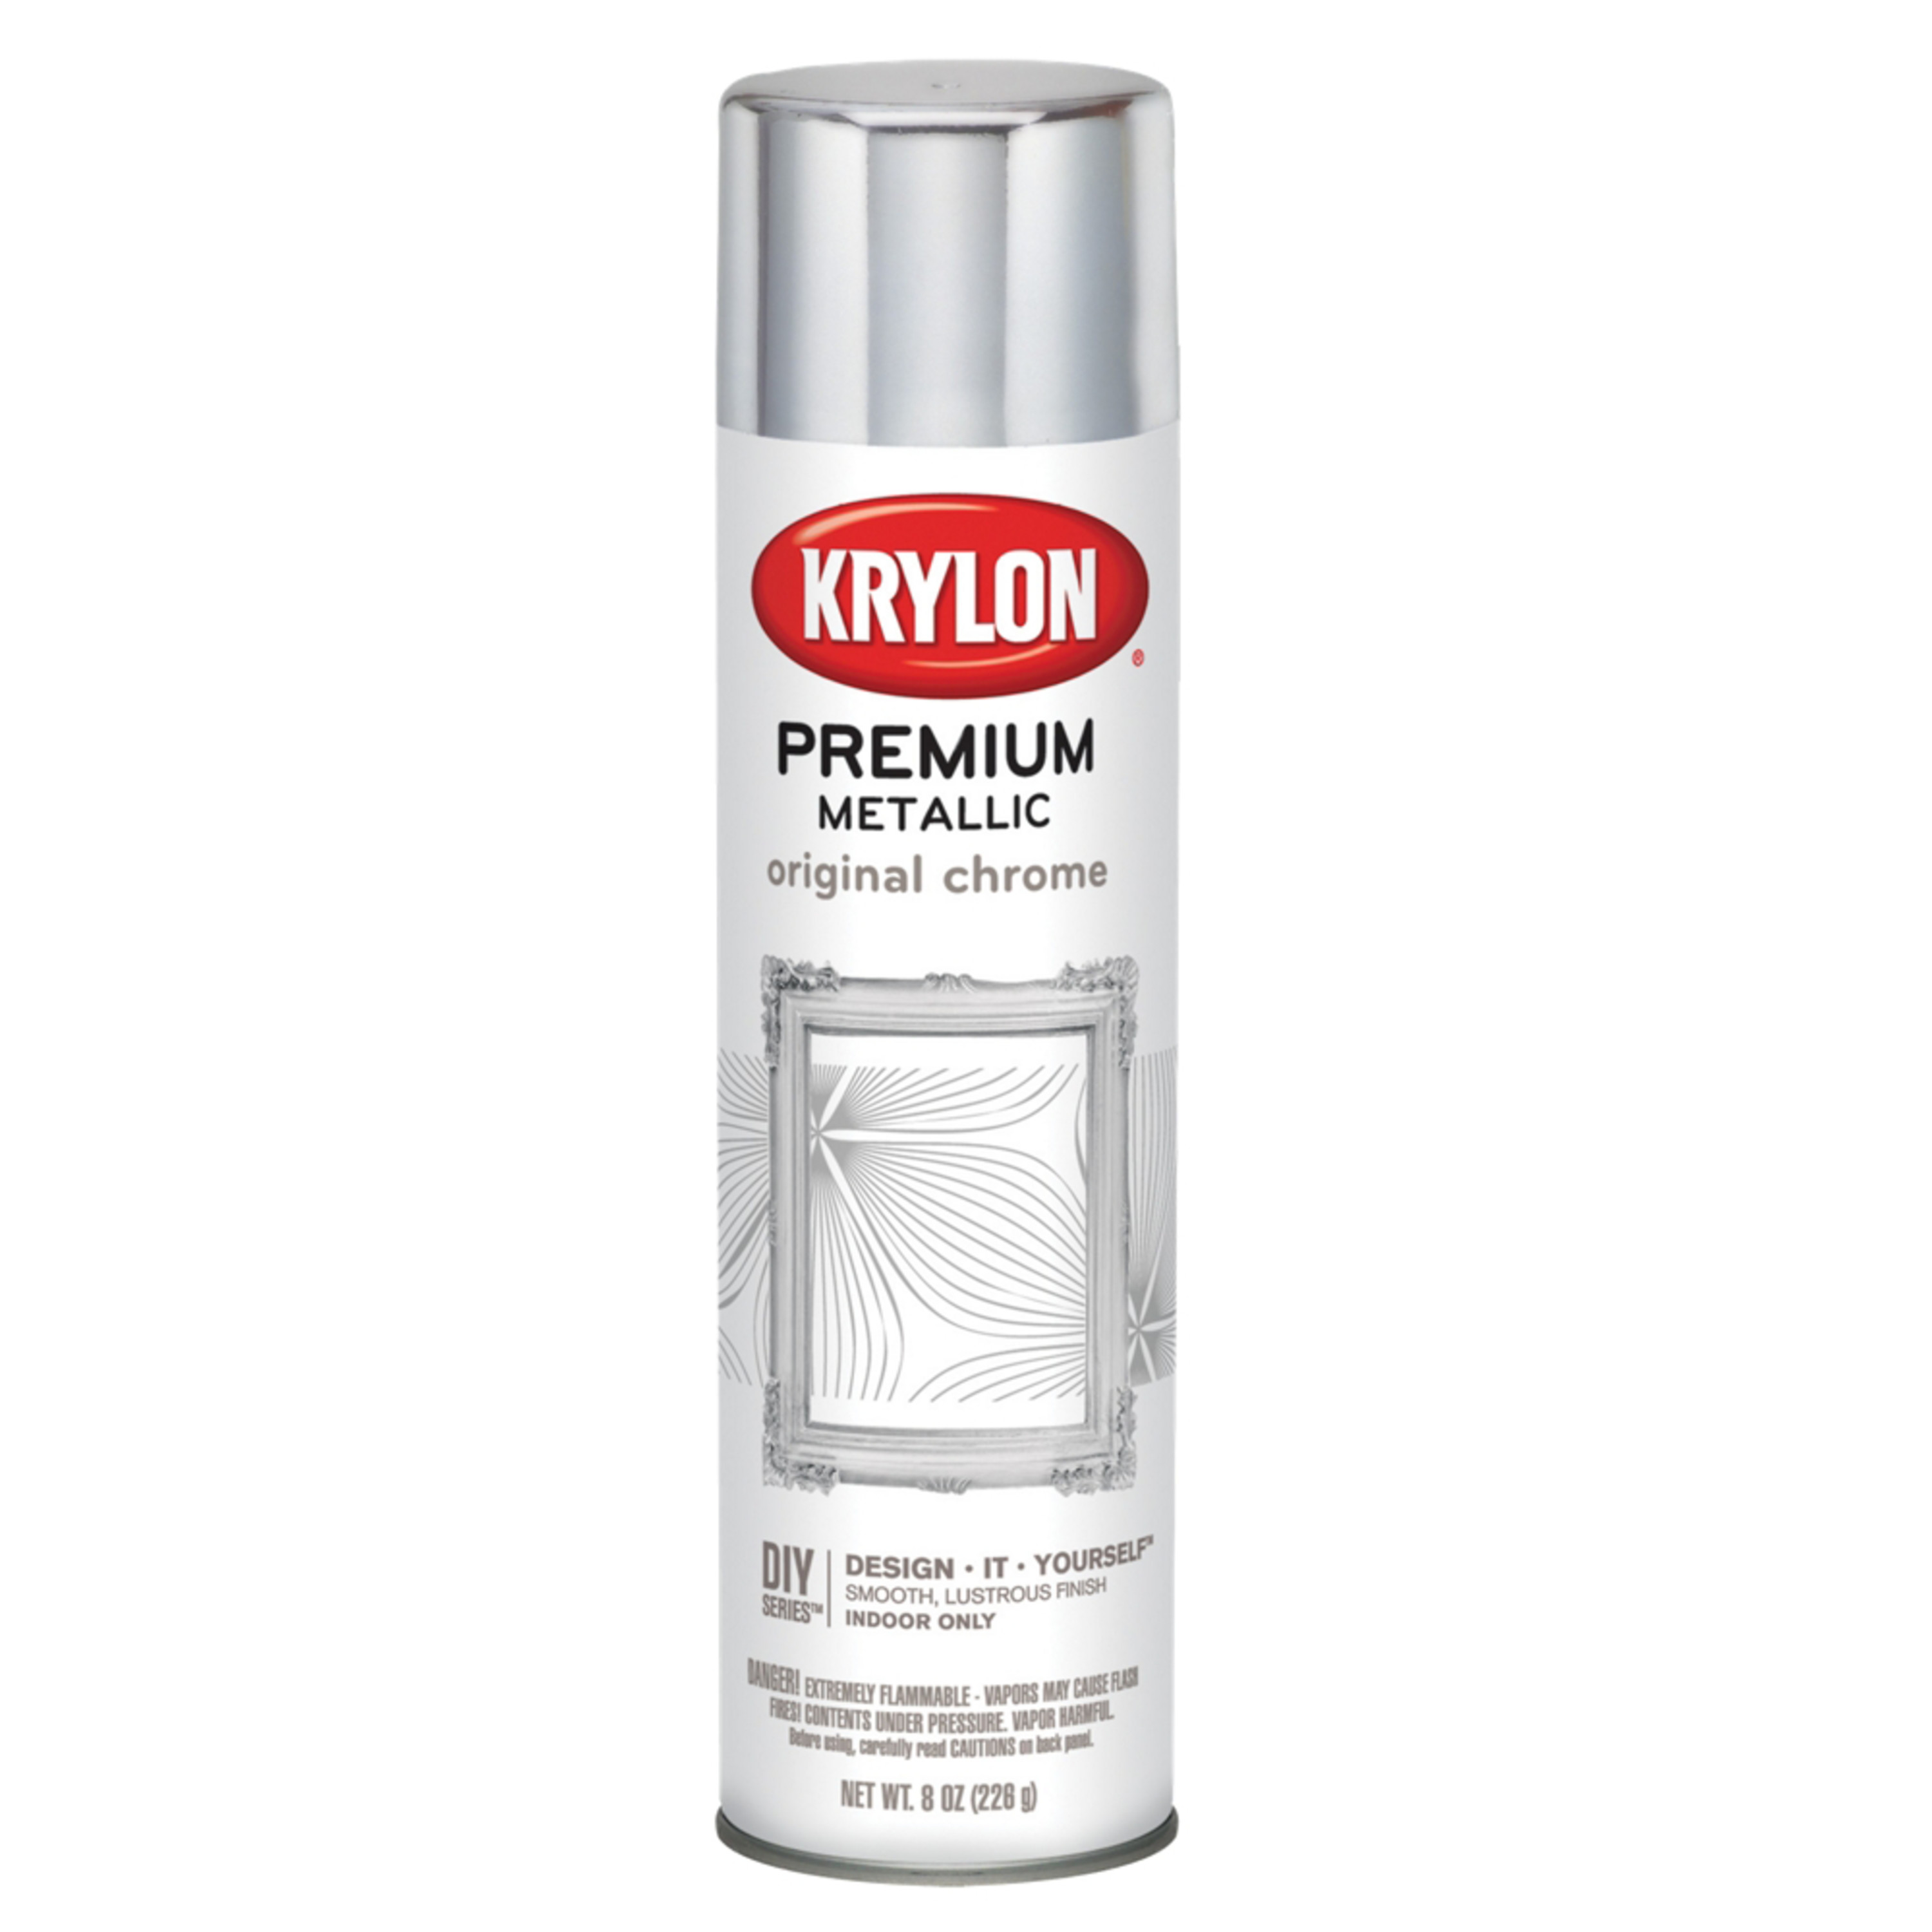 Krylon Premium Metallic Coating Original Chrome Spray Paint, 8 Oz. - image 1 of 2